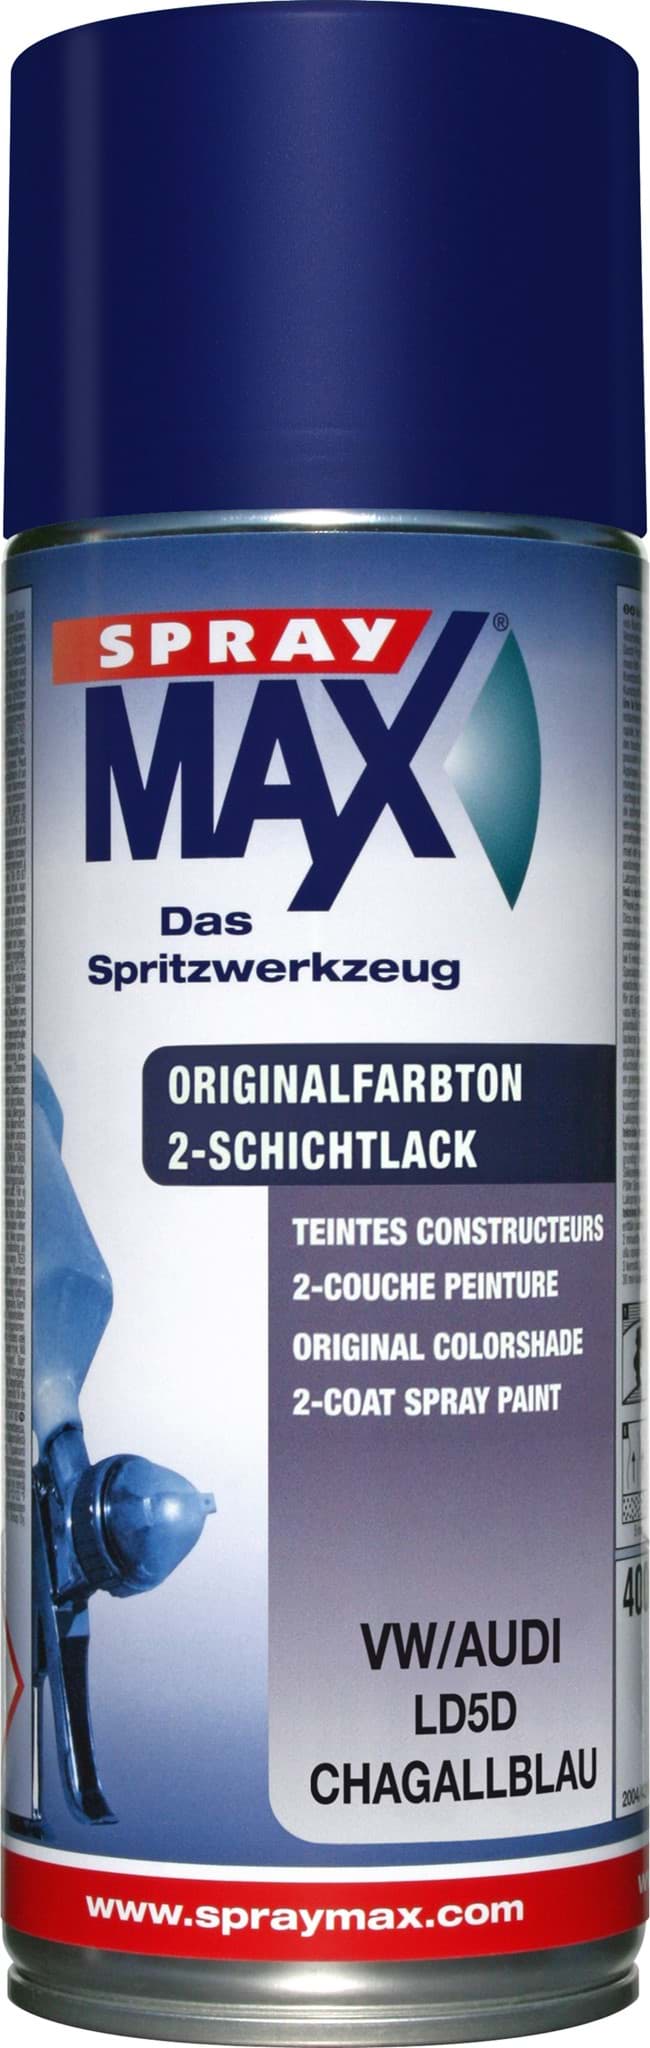 SprayMax Originalfarbton für VW LD5D chagallblau resmi